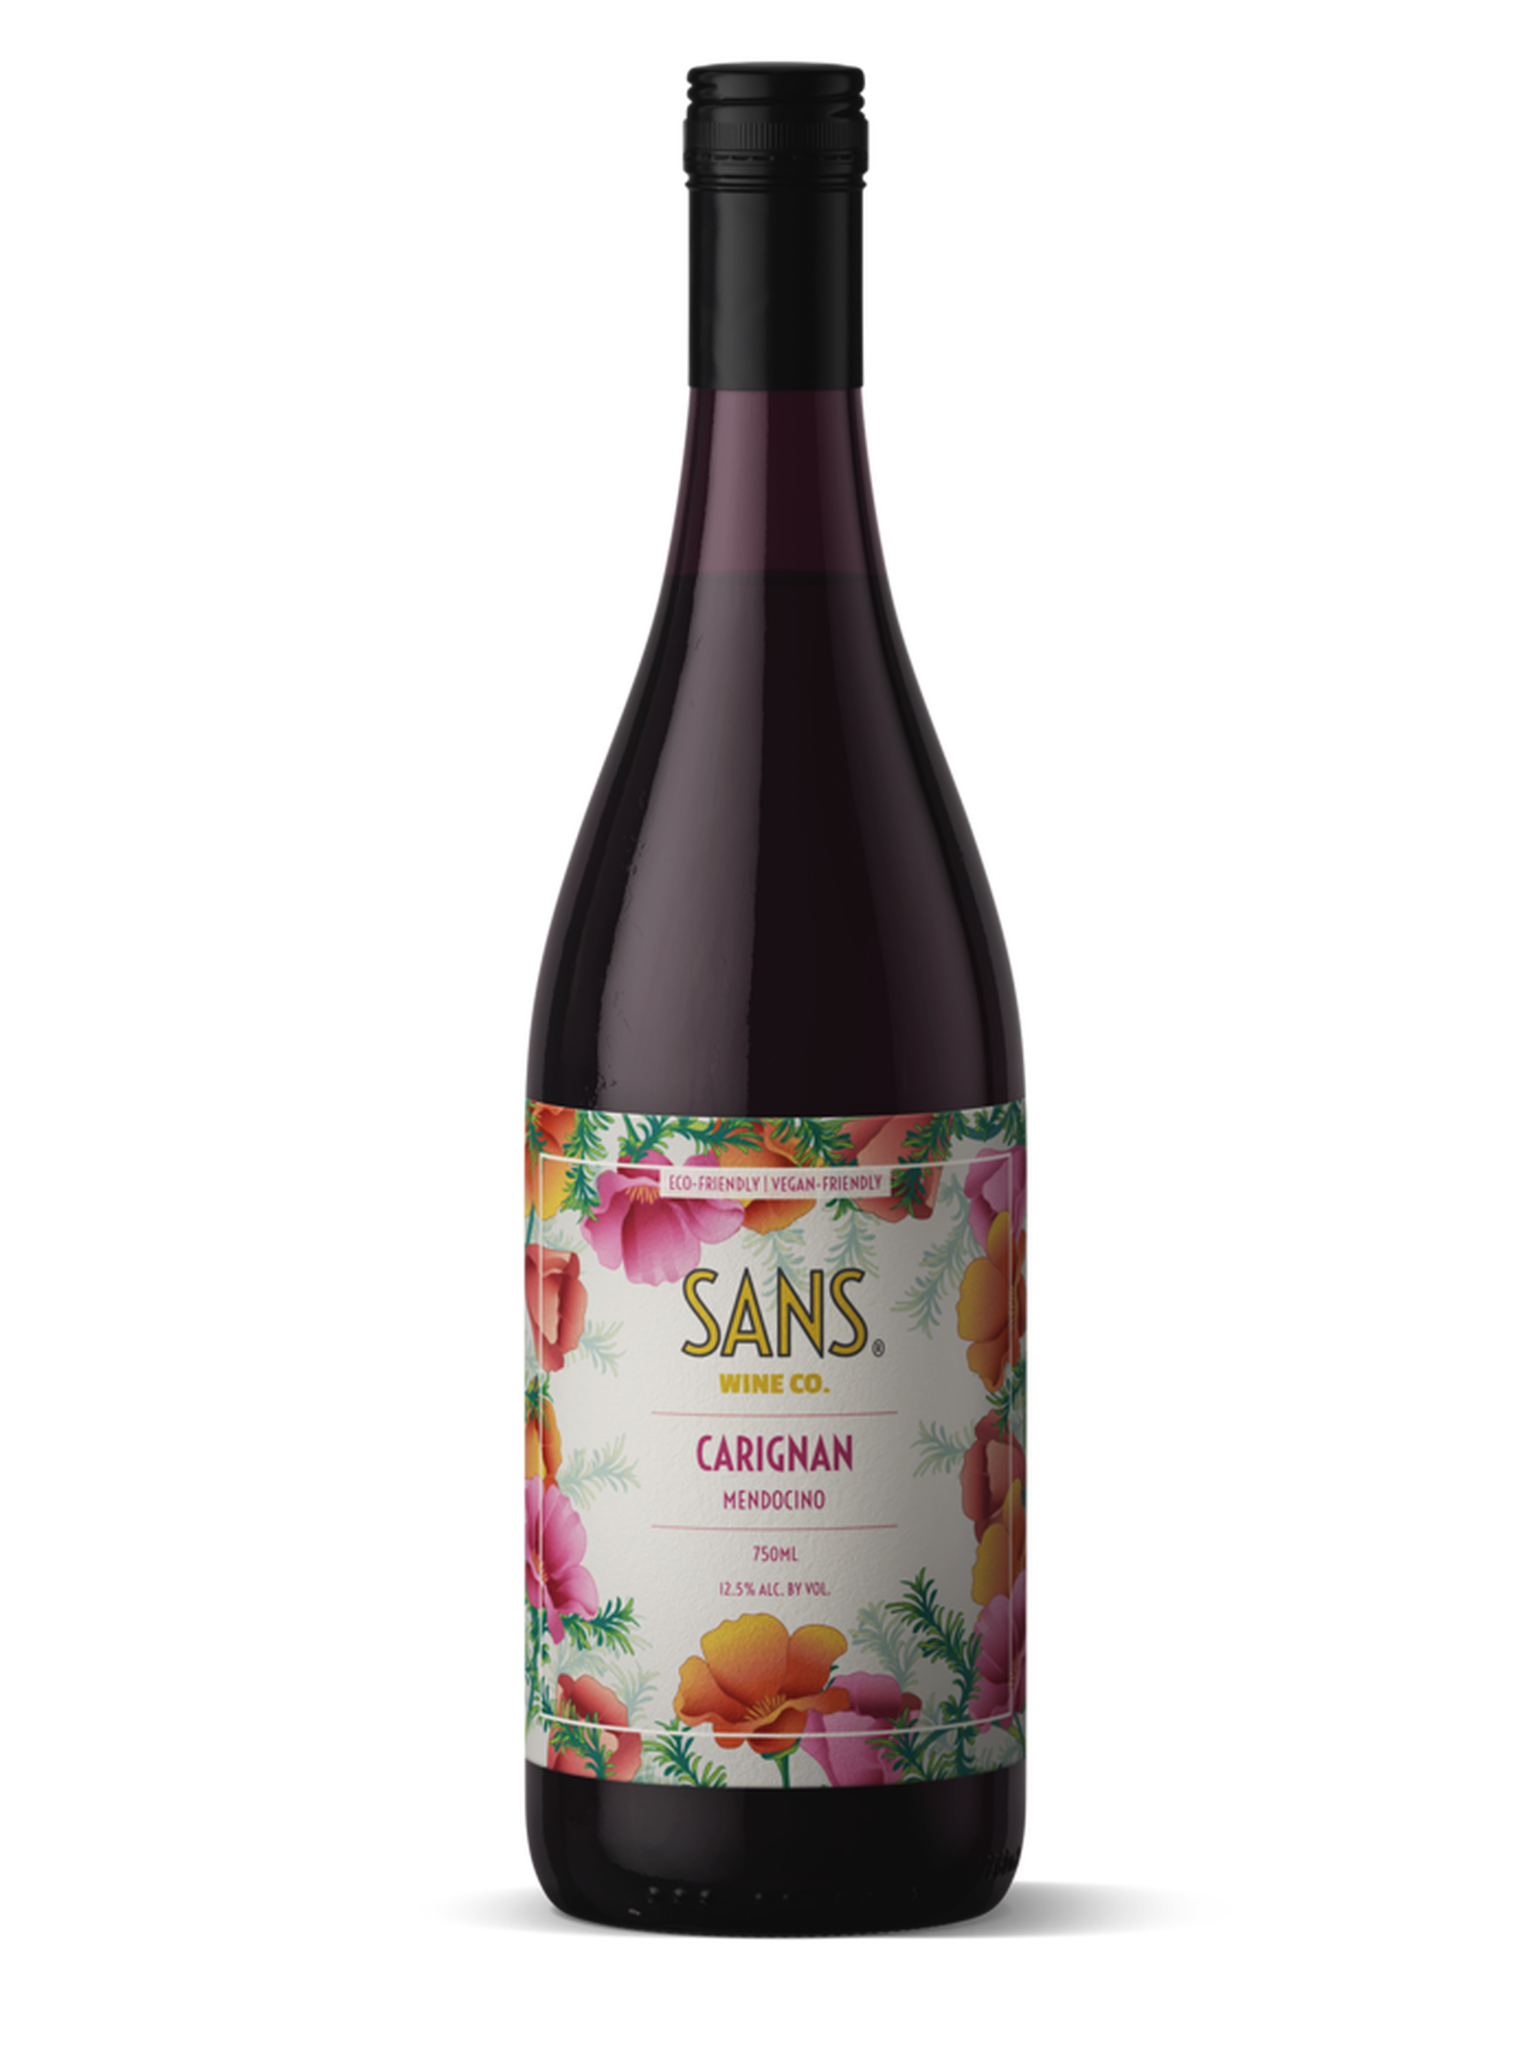 Sans Wine Co. Carignan Mendocino NV 750mL